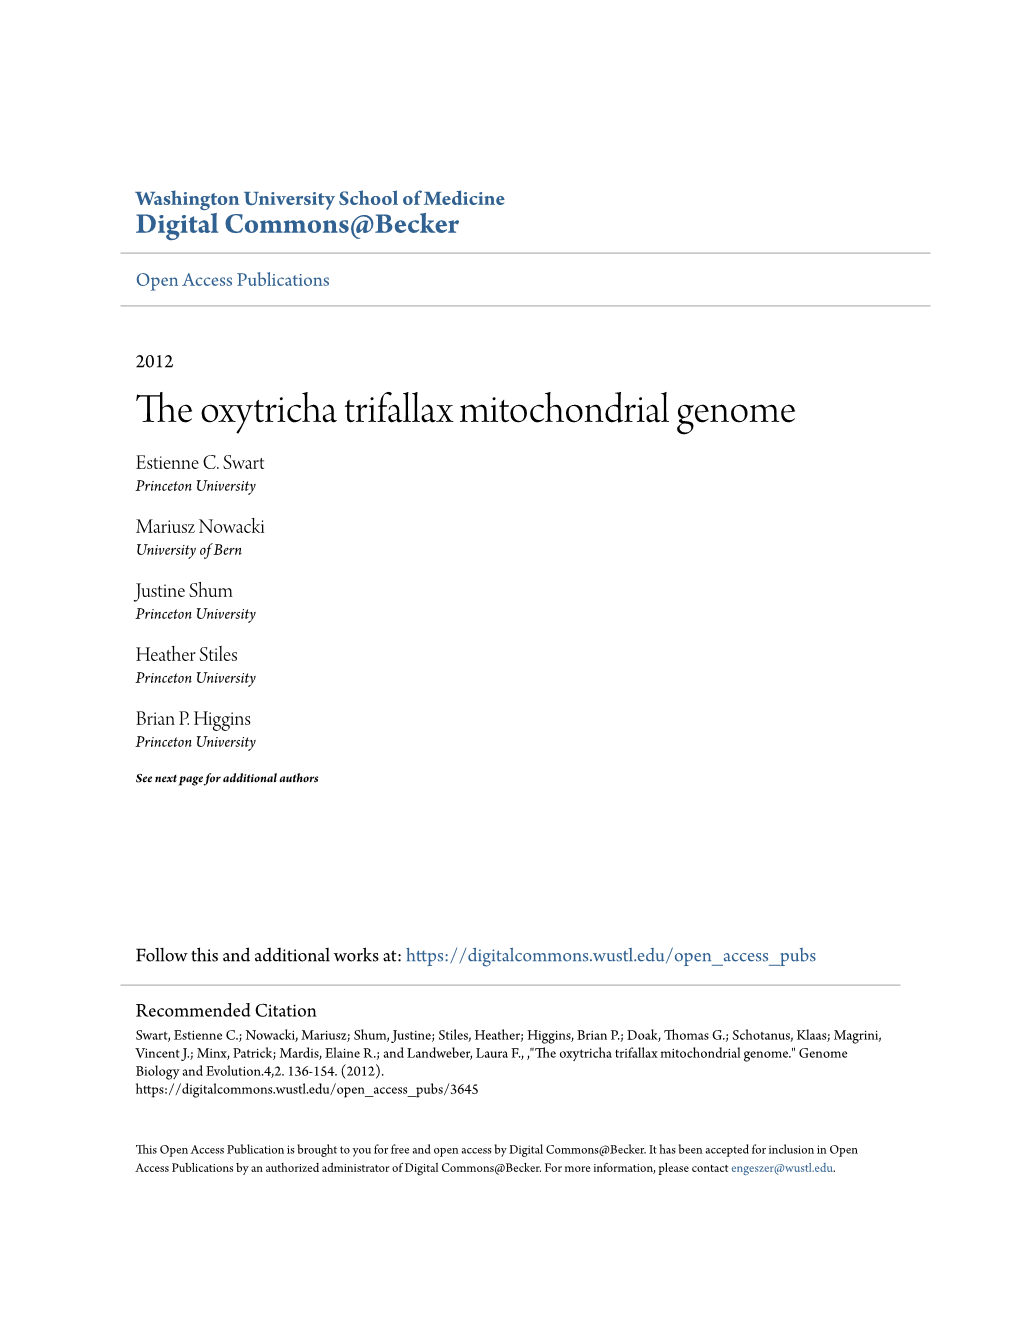 The Oxytricha Trifallax Mitochondrial Genome